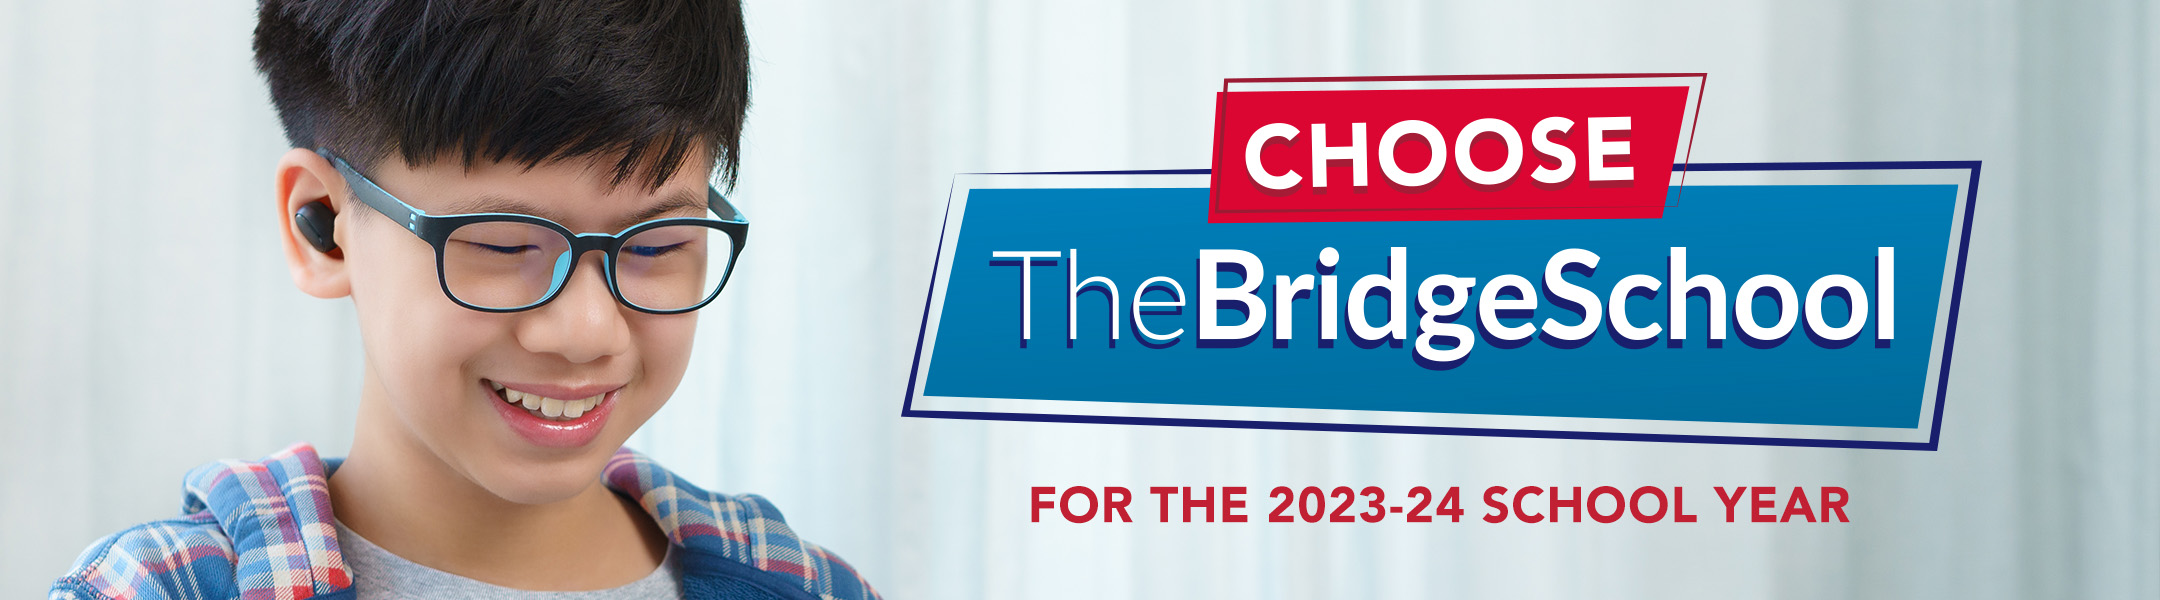 Choose The Bridge School for the 2023 through 2024 school year.